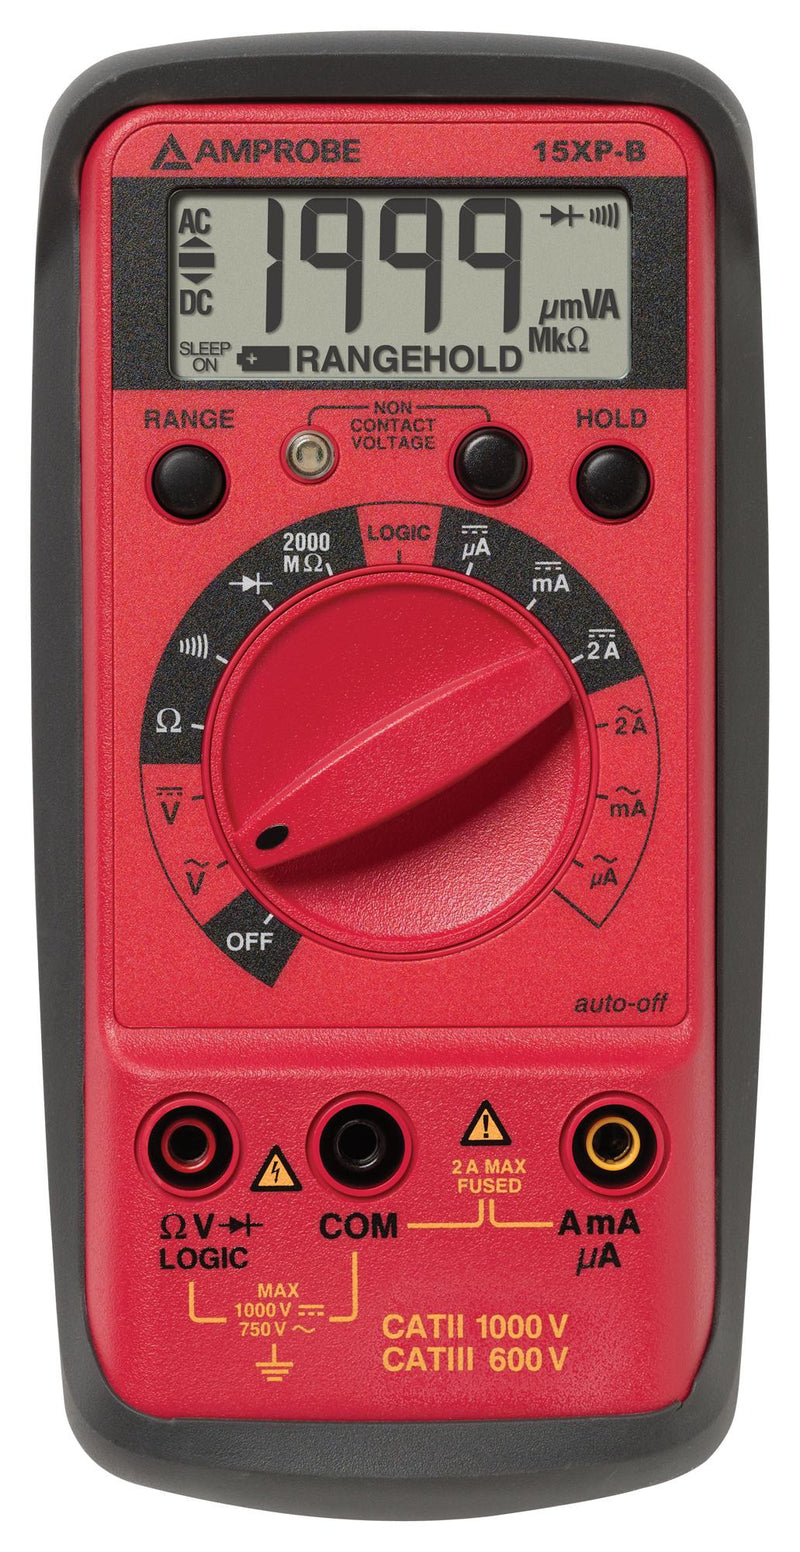 BEHA-AMPROBE 15XP-B Handheld Digital Multimeter, 1999 Count, True RMS, Auto Range, 3.5 Digit